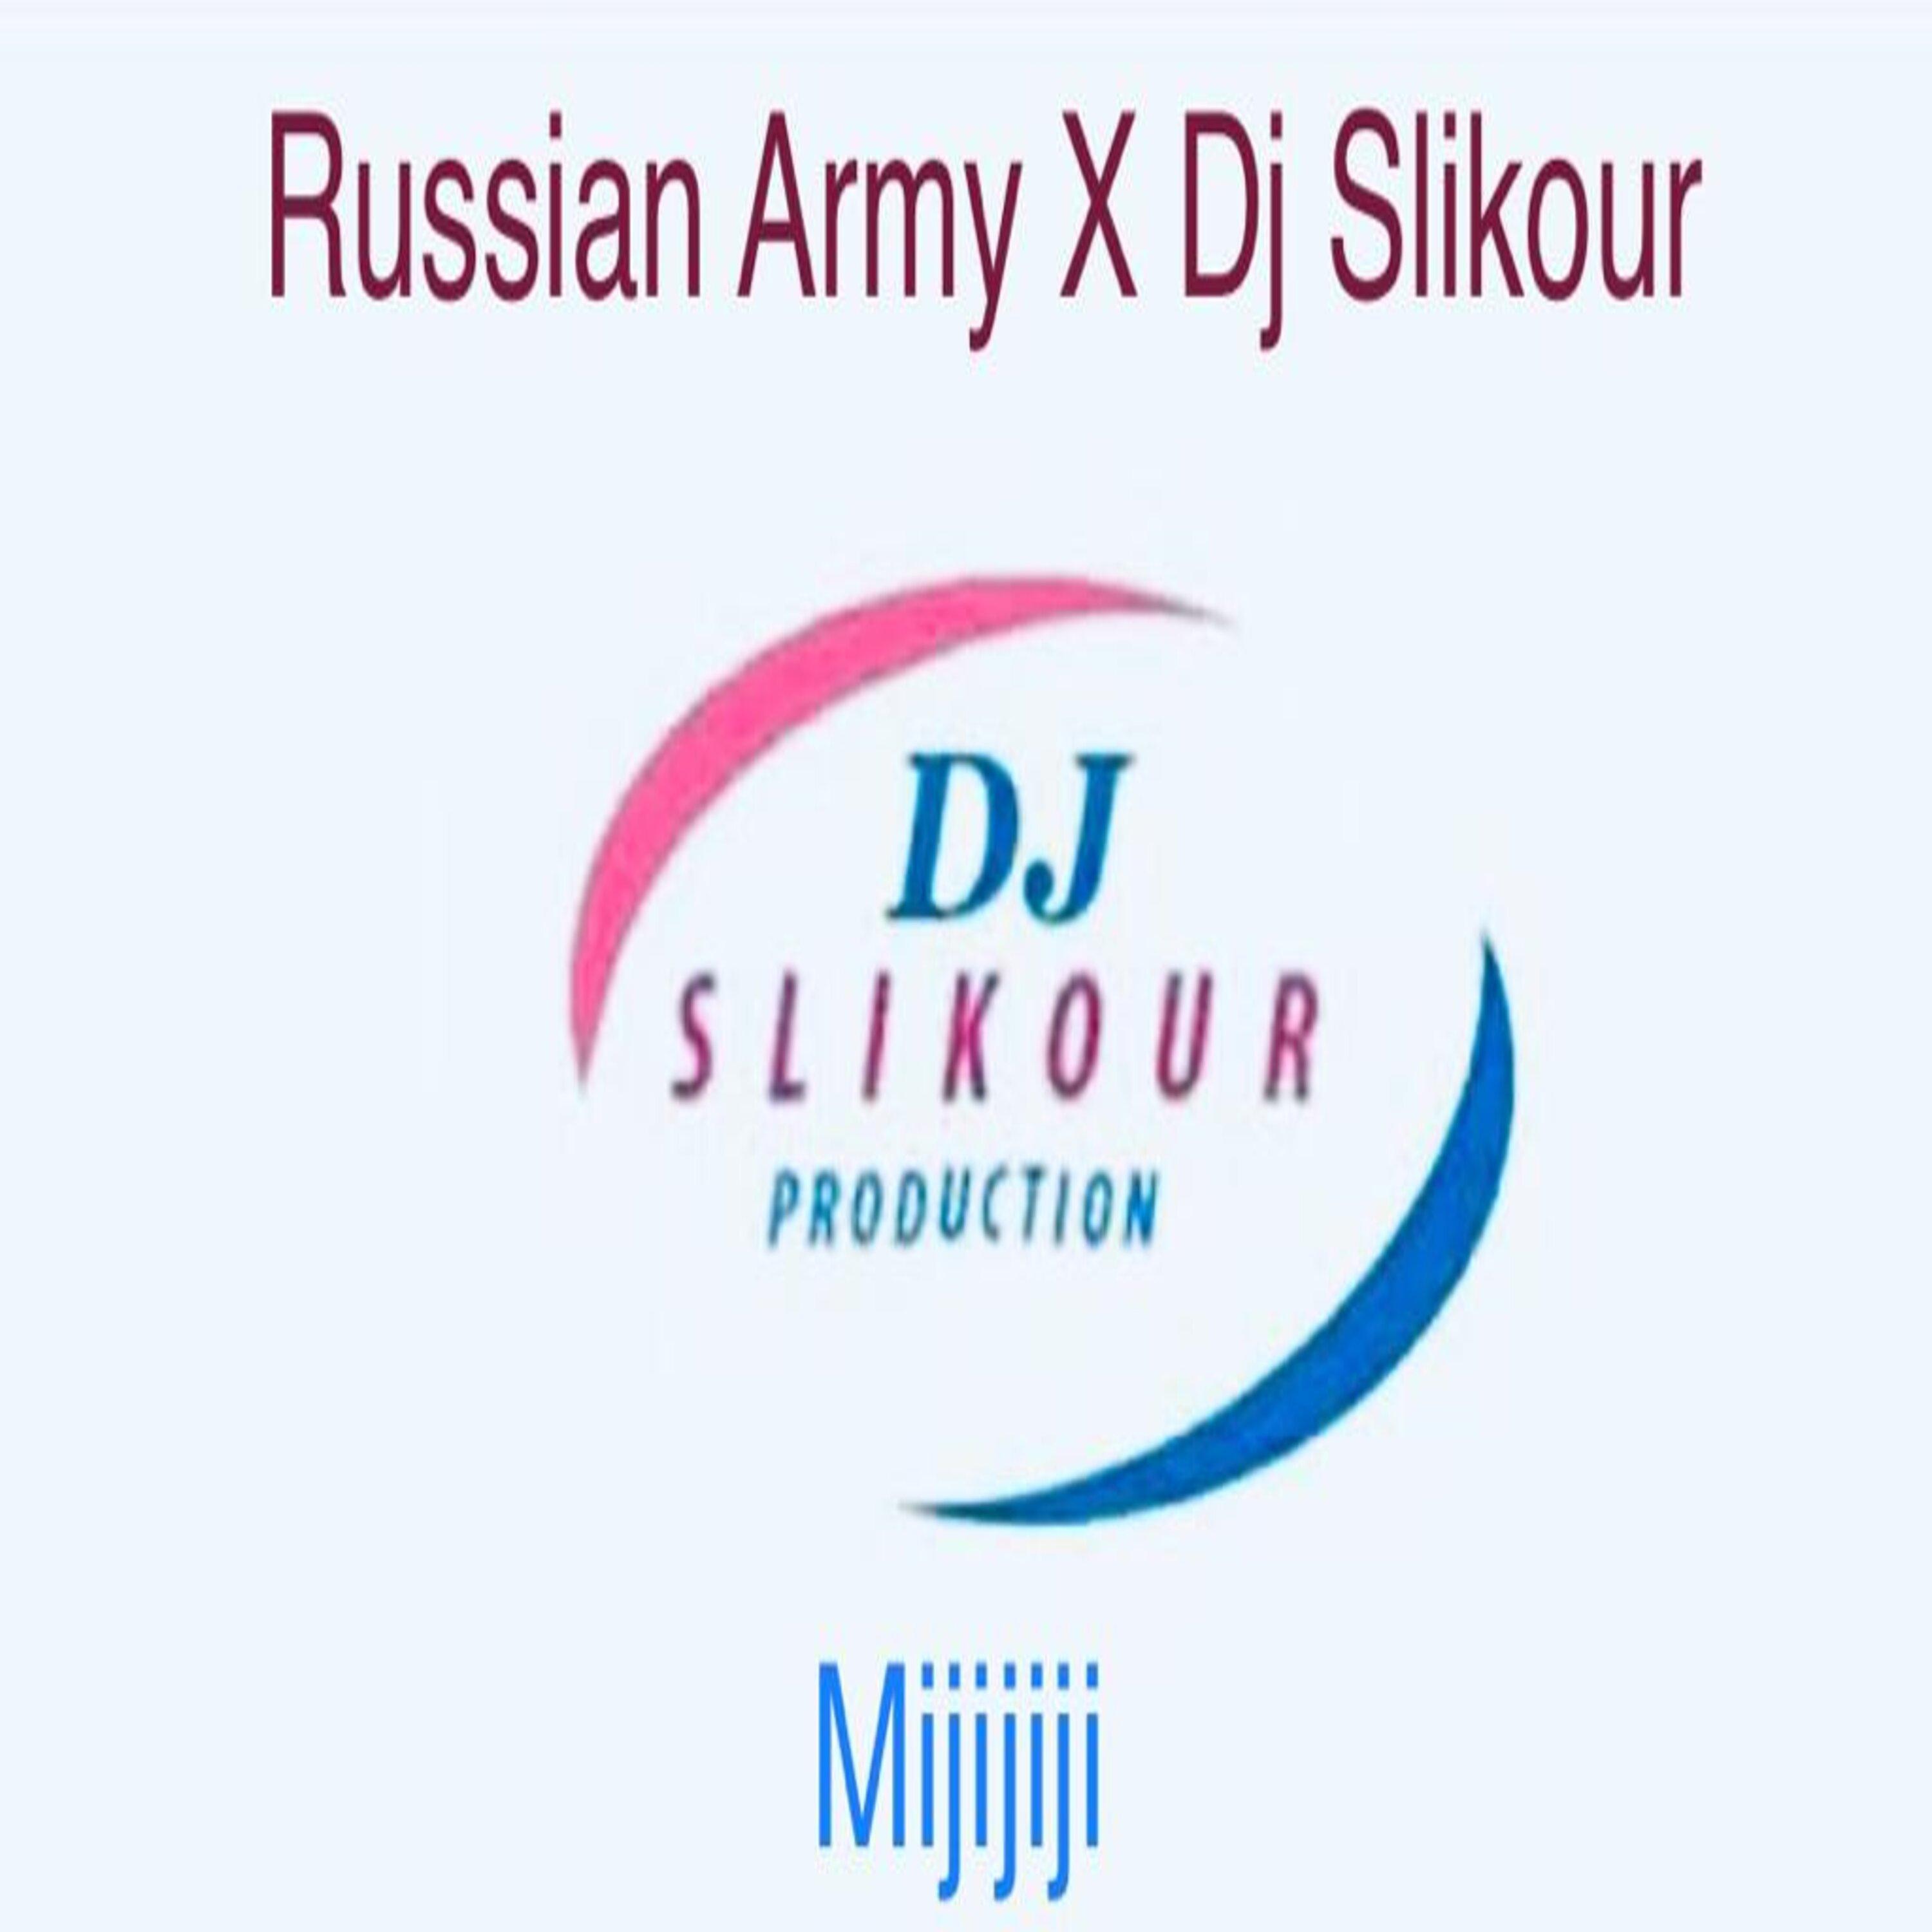 Dj Slikour - Mijijiji (feat. Russian Army)